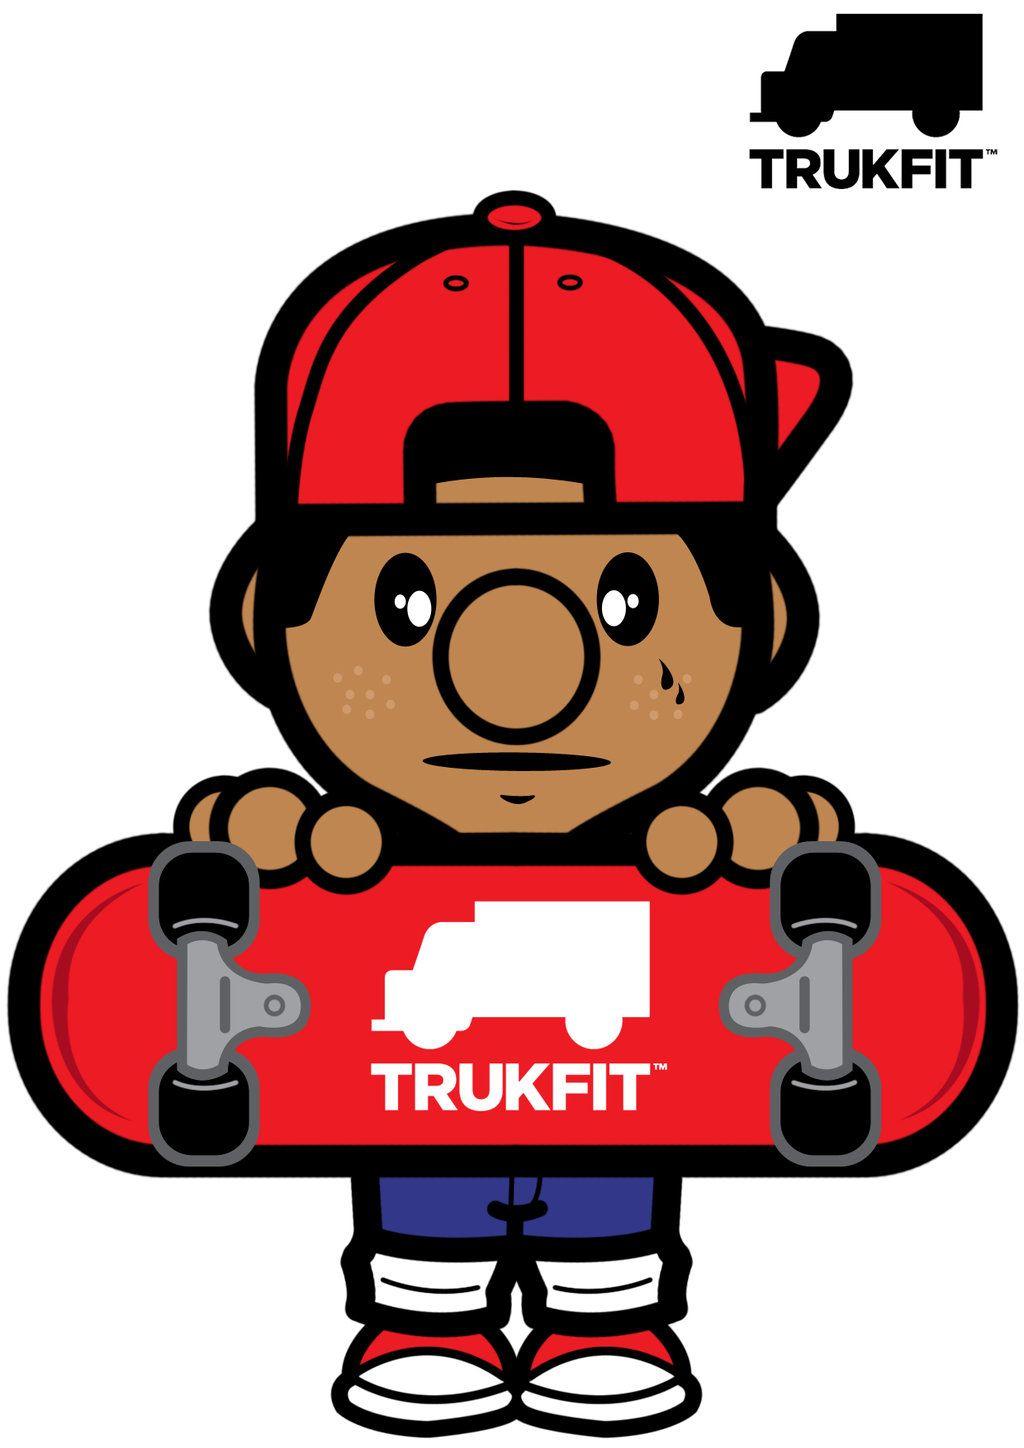 Lil Wayne Trukfit Clothing Logo - Y'all still pretending like Lil' Wayne didn't flood the streets